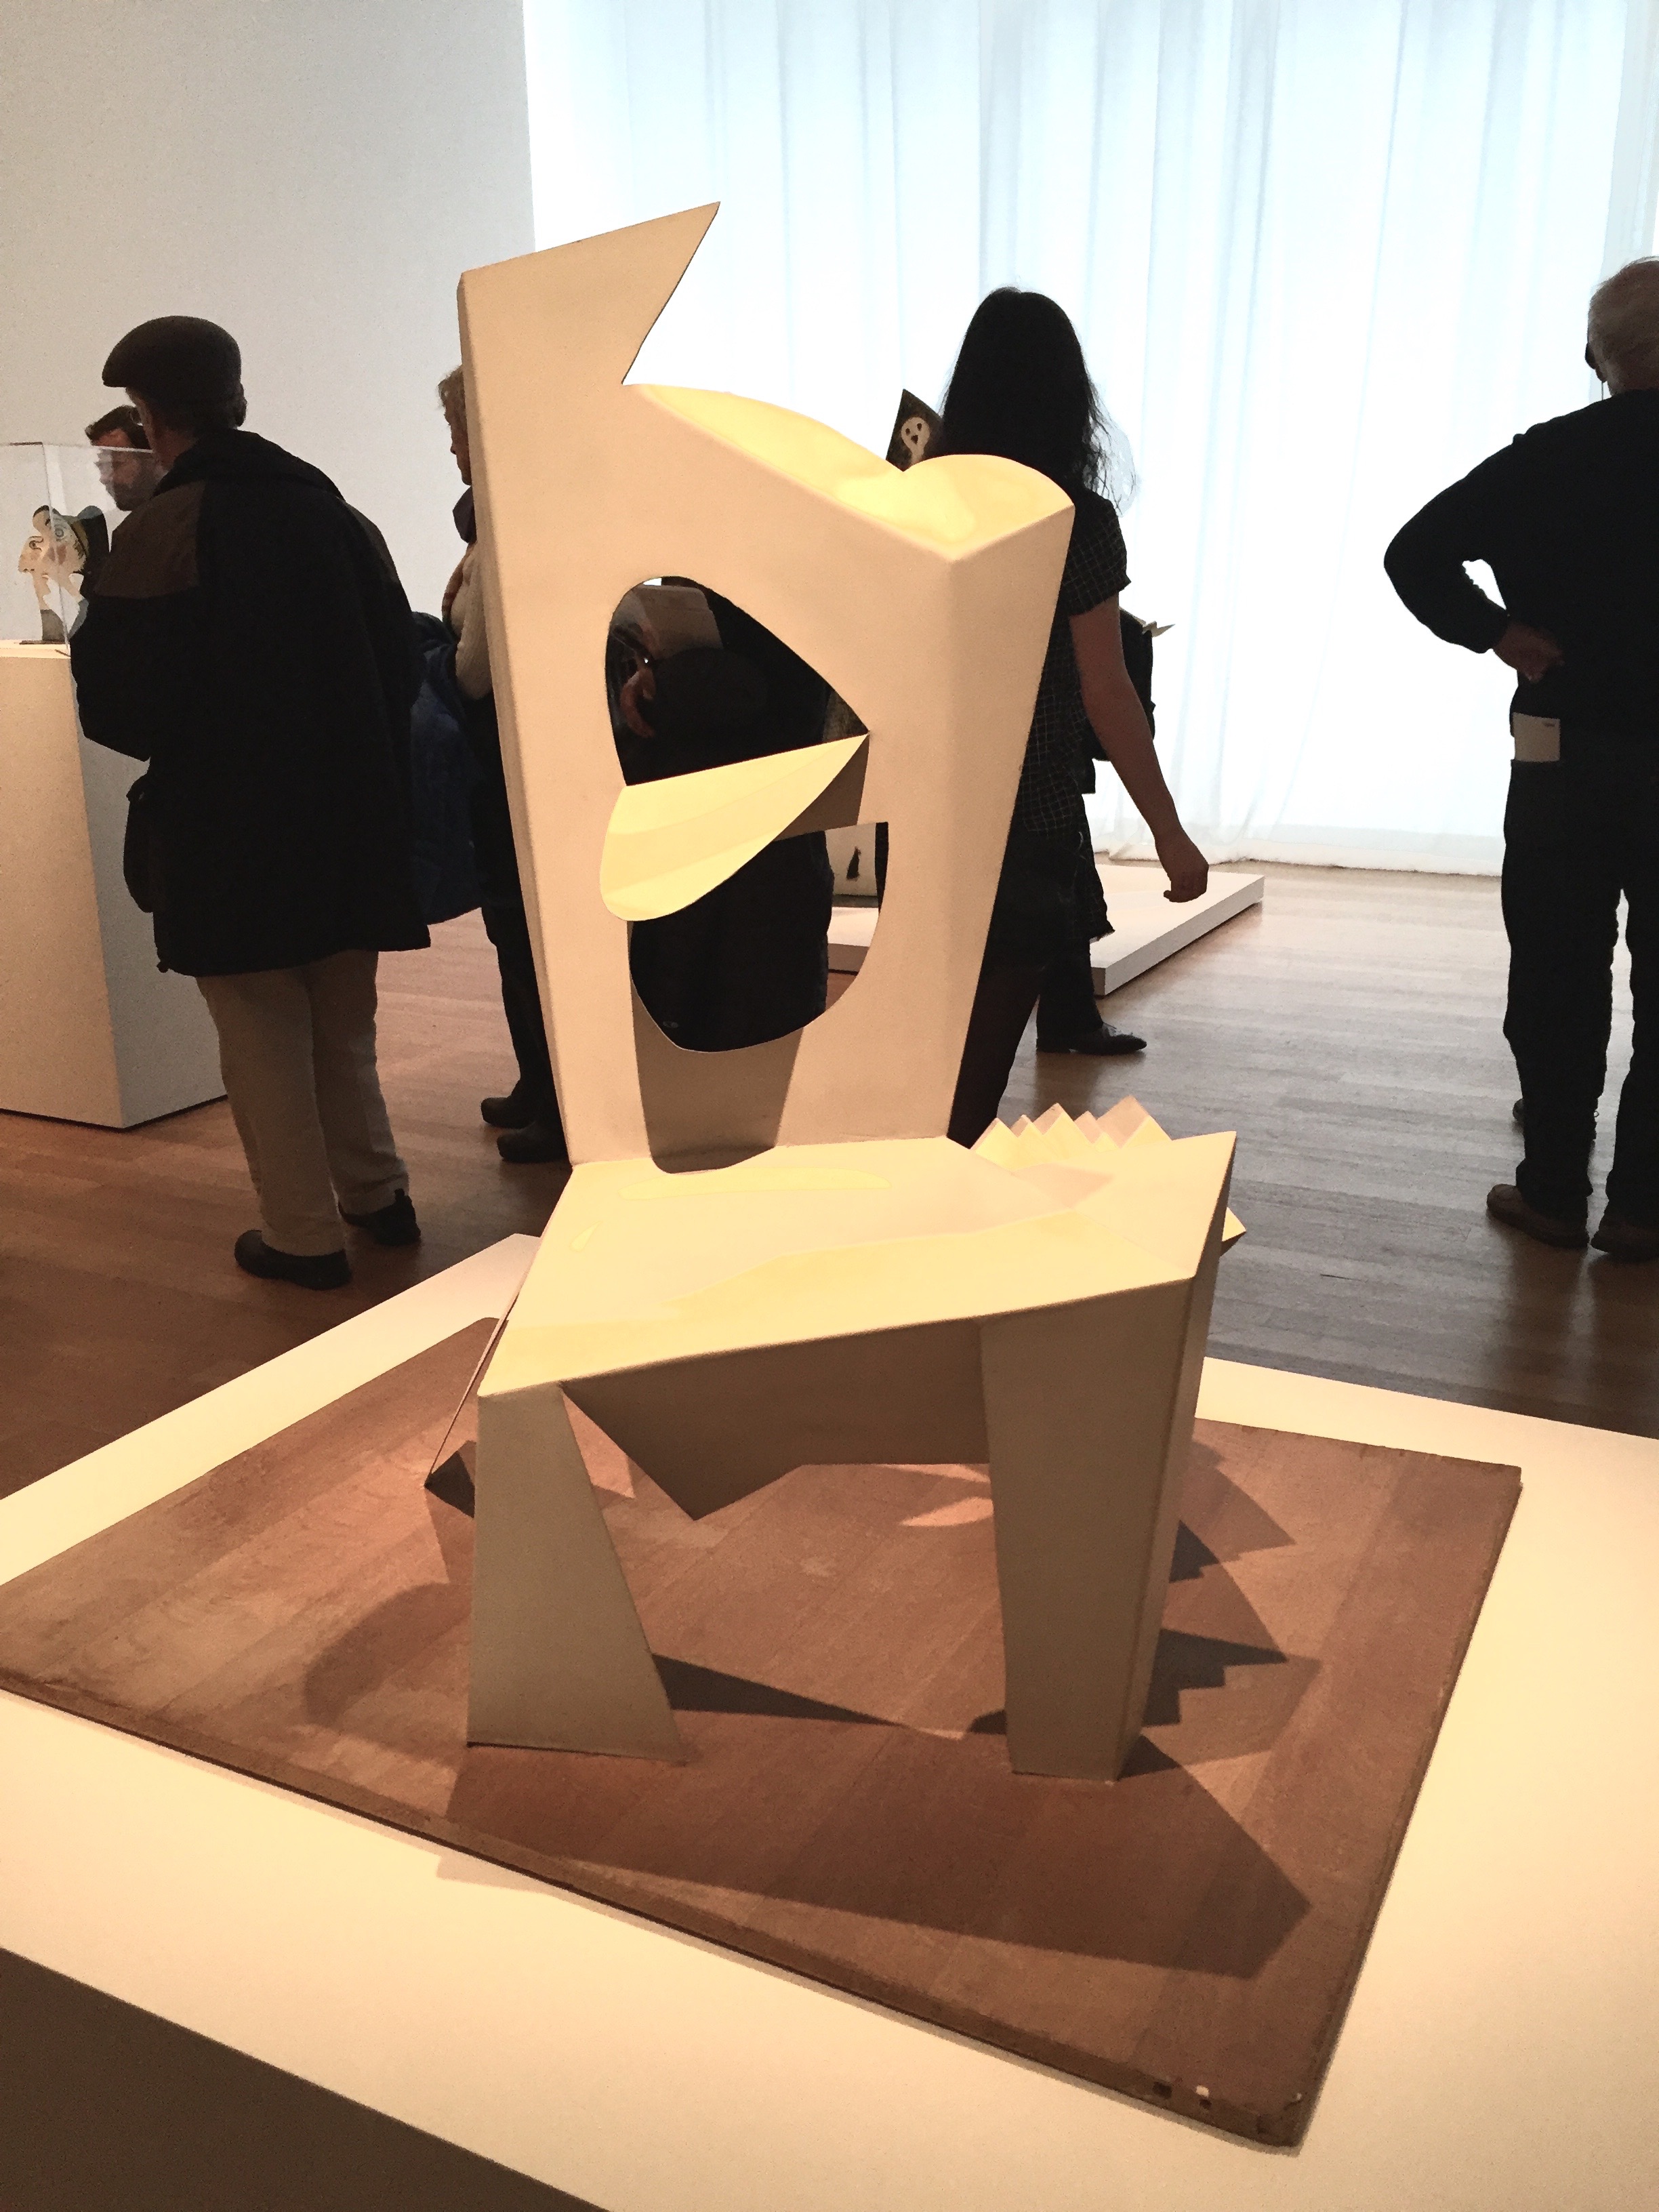 Minimalist Chair at Picasso Sculpture Exhibit